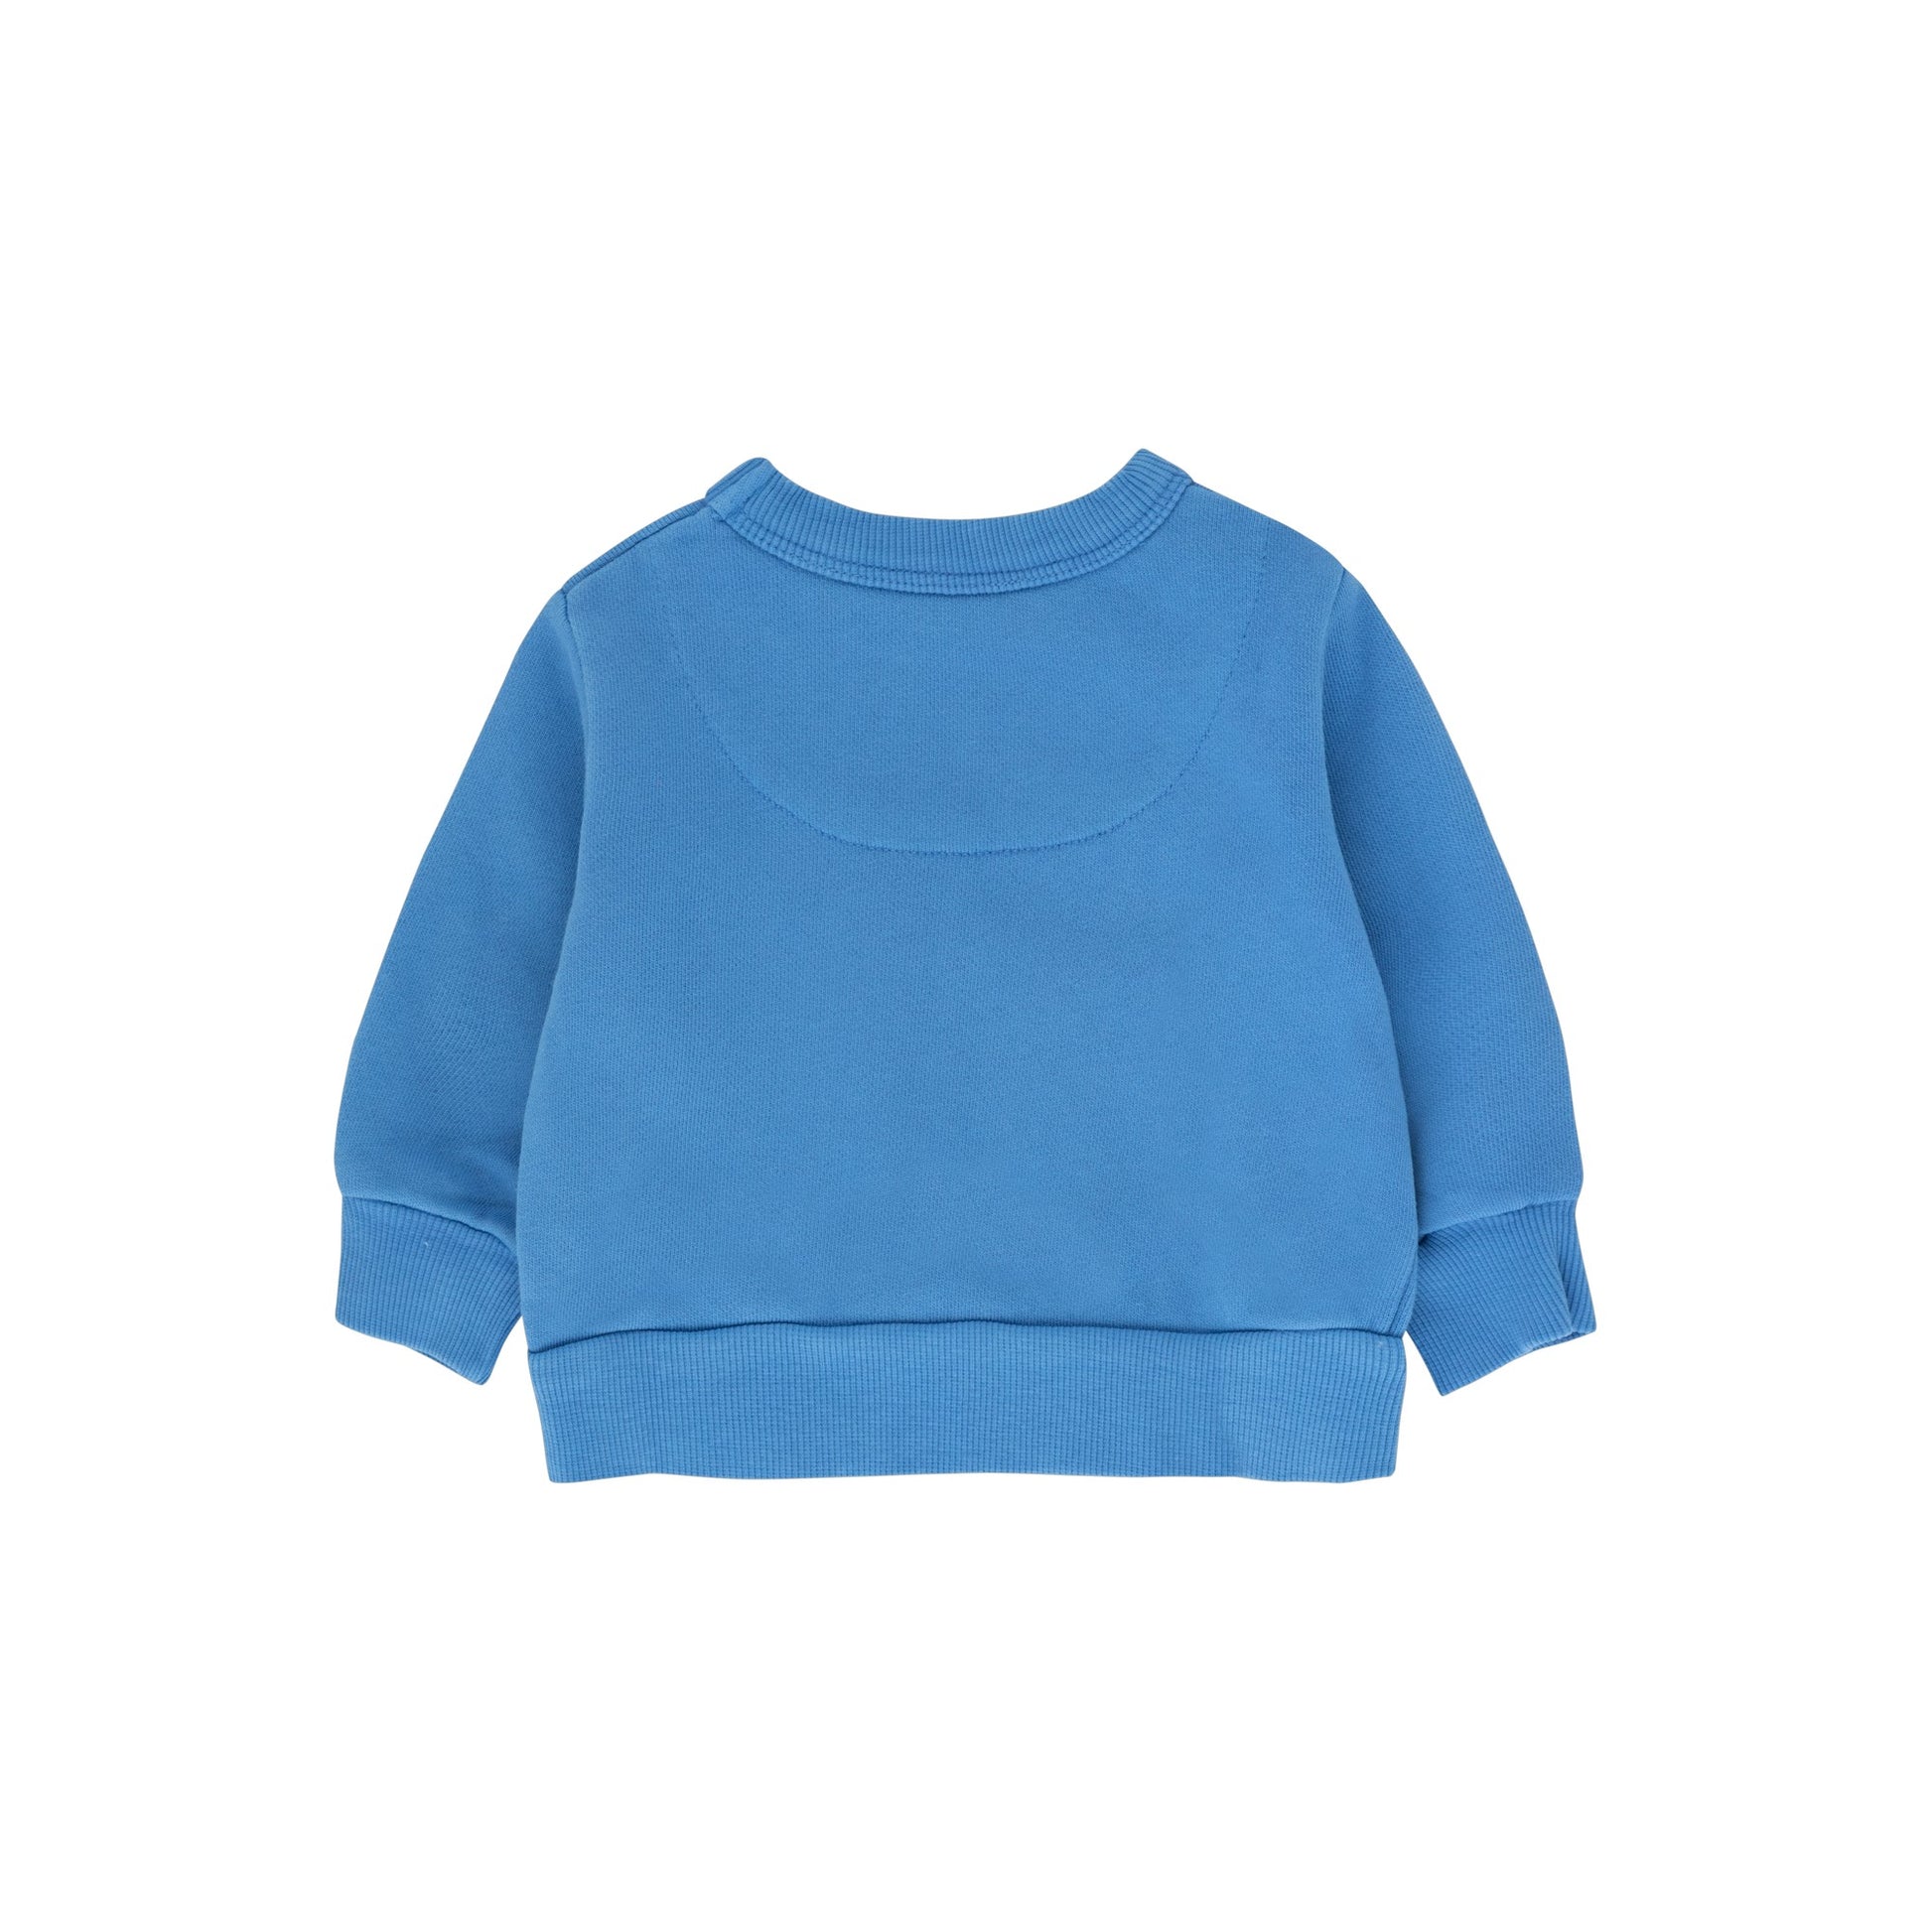 TINYCOTTONS Siesta Baby Sweatshirt ALWAYS SHOW